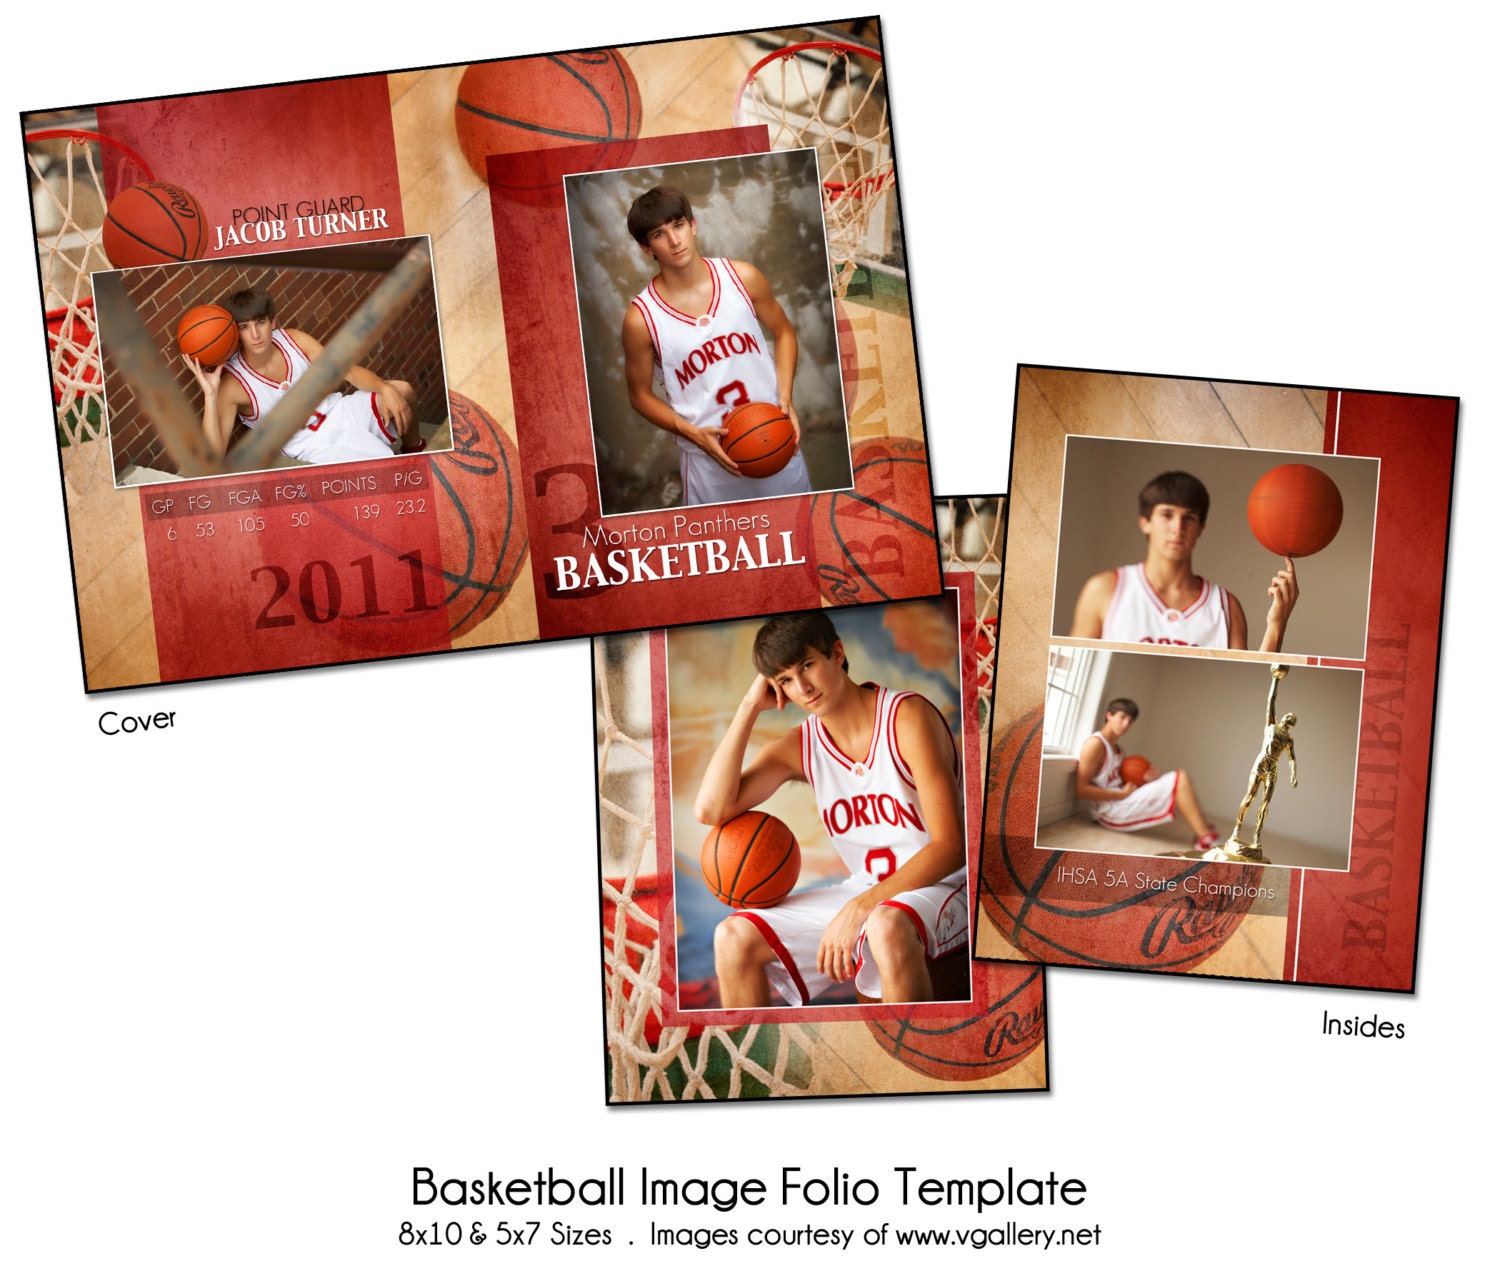 BASKETBALL Image Folio Memory Mate Sports Photo Template